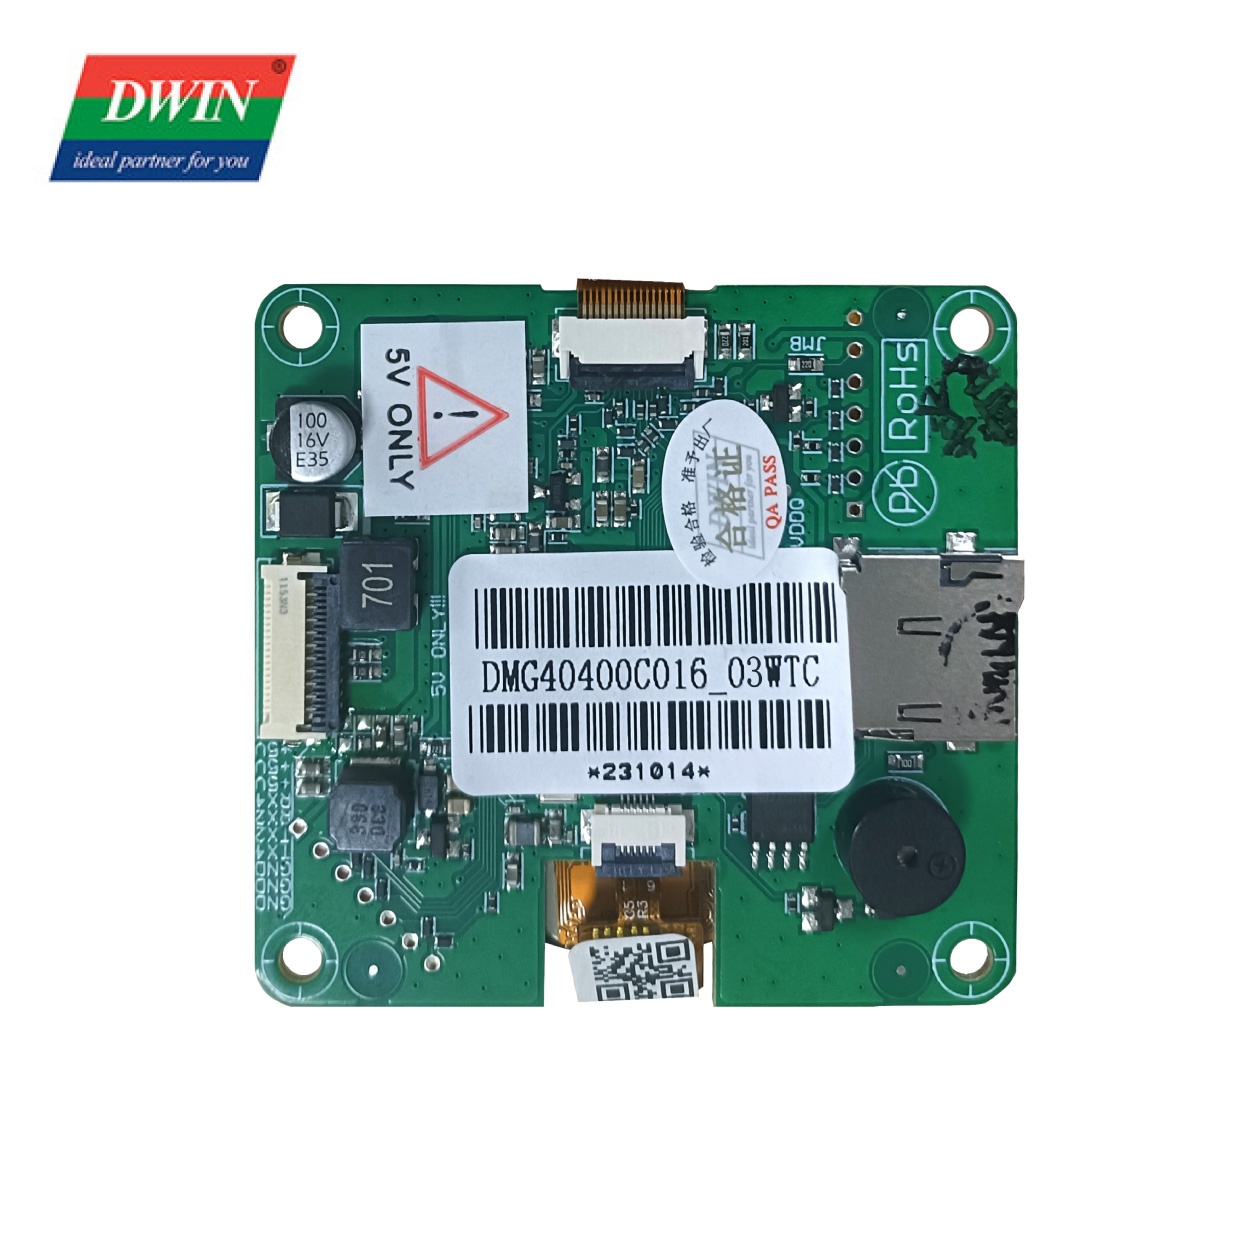 1.6 Inṣi Smart LCD Smart Circle DMG40400C016_03WTC (Ipele Iṣowo)